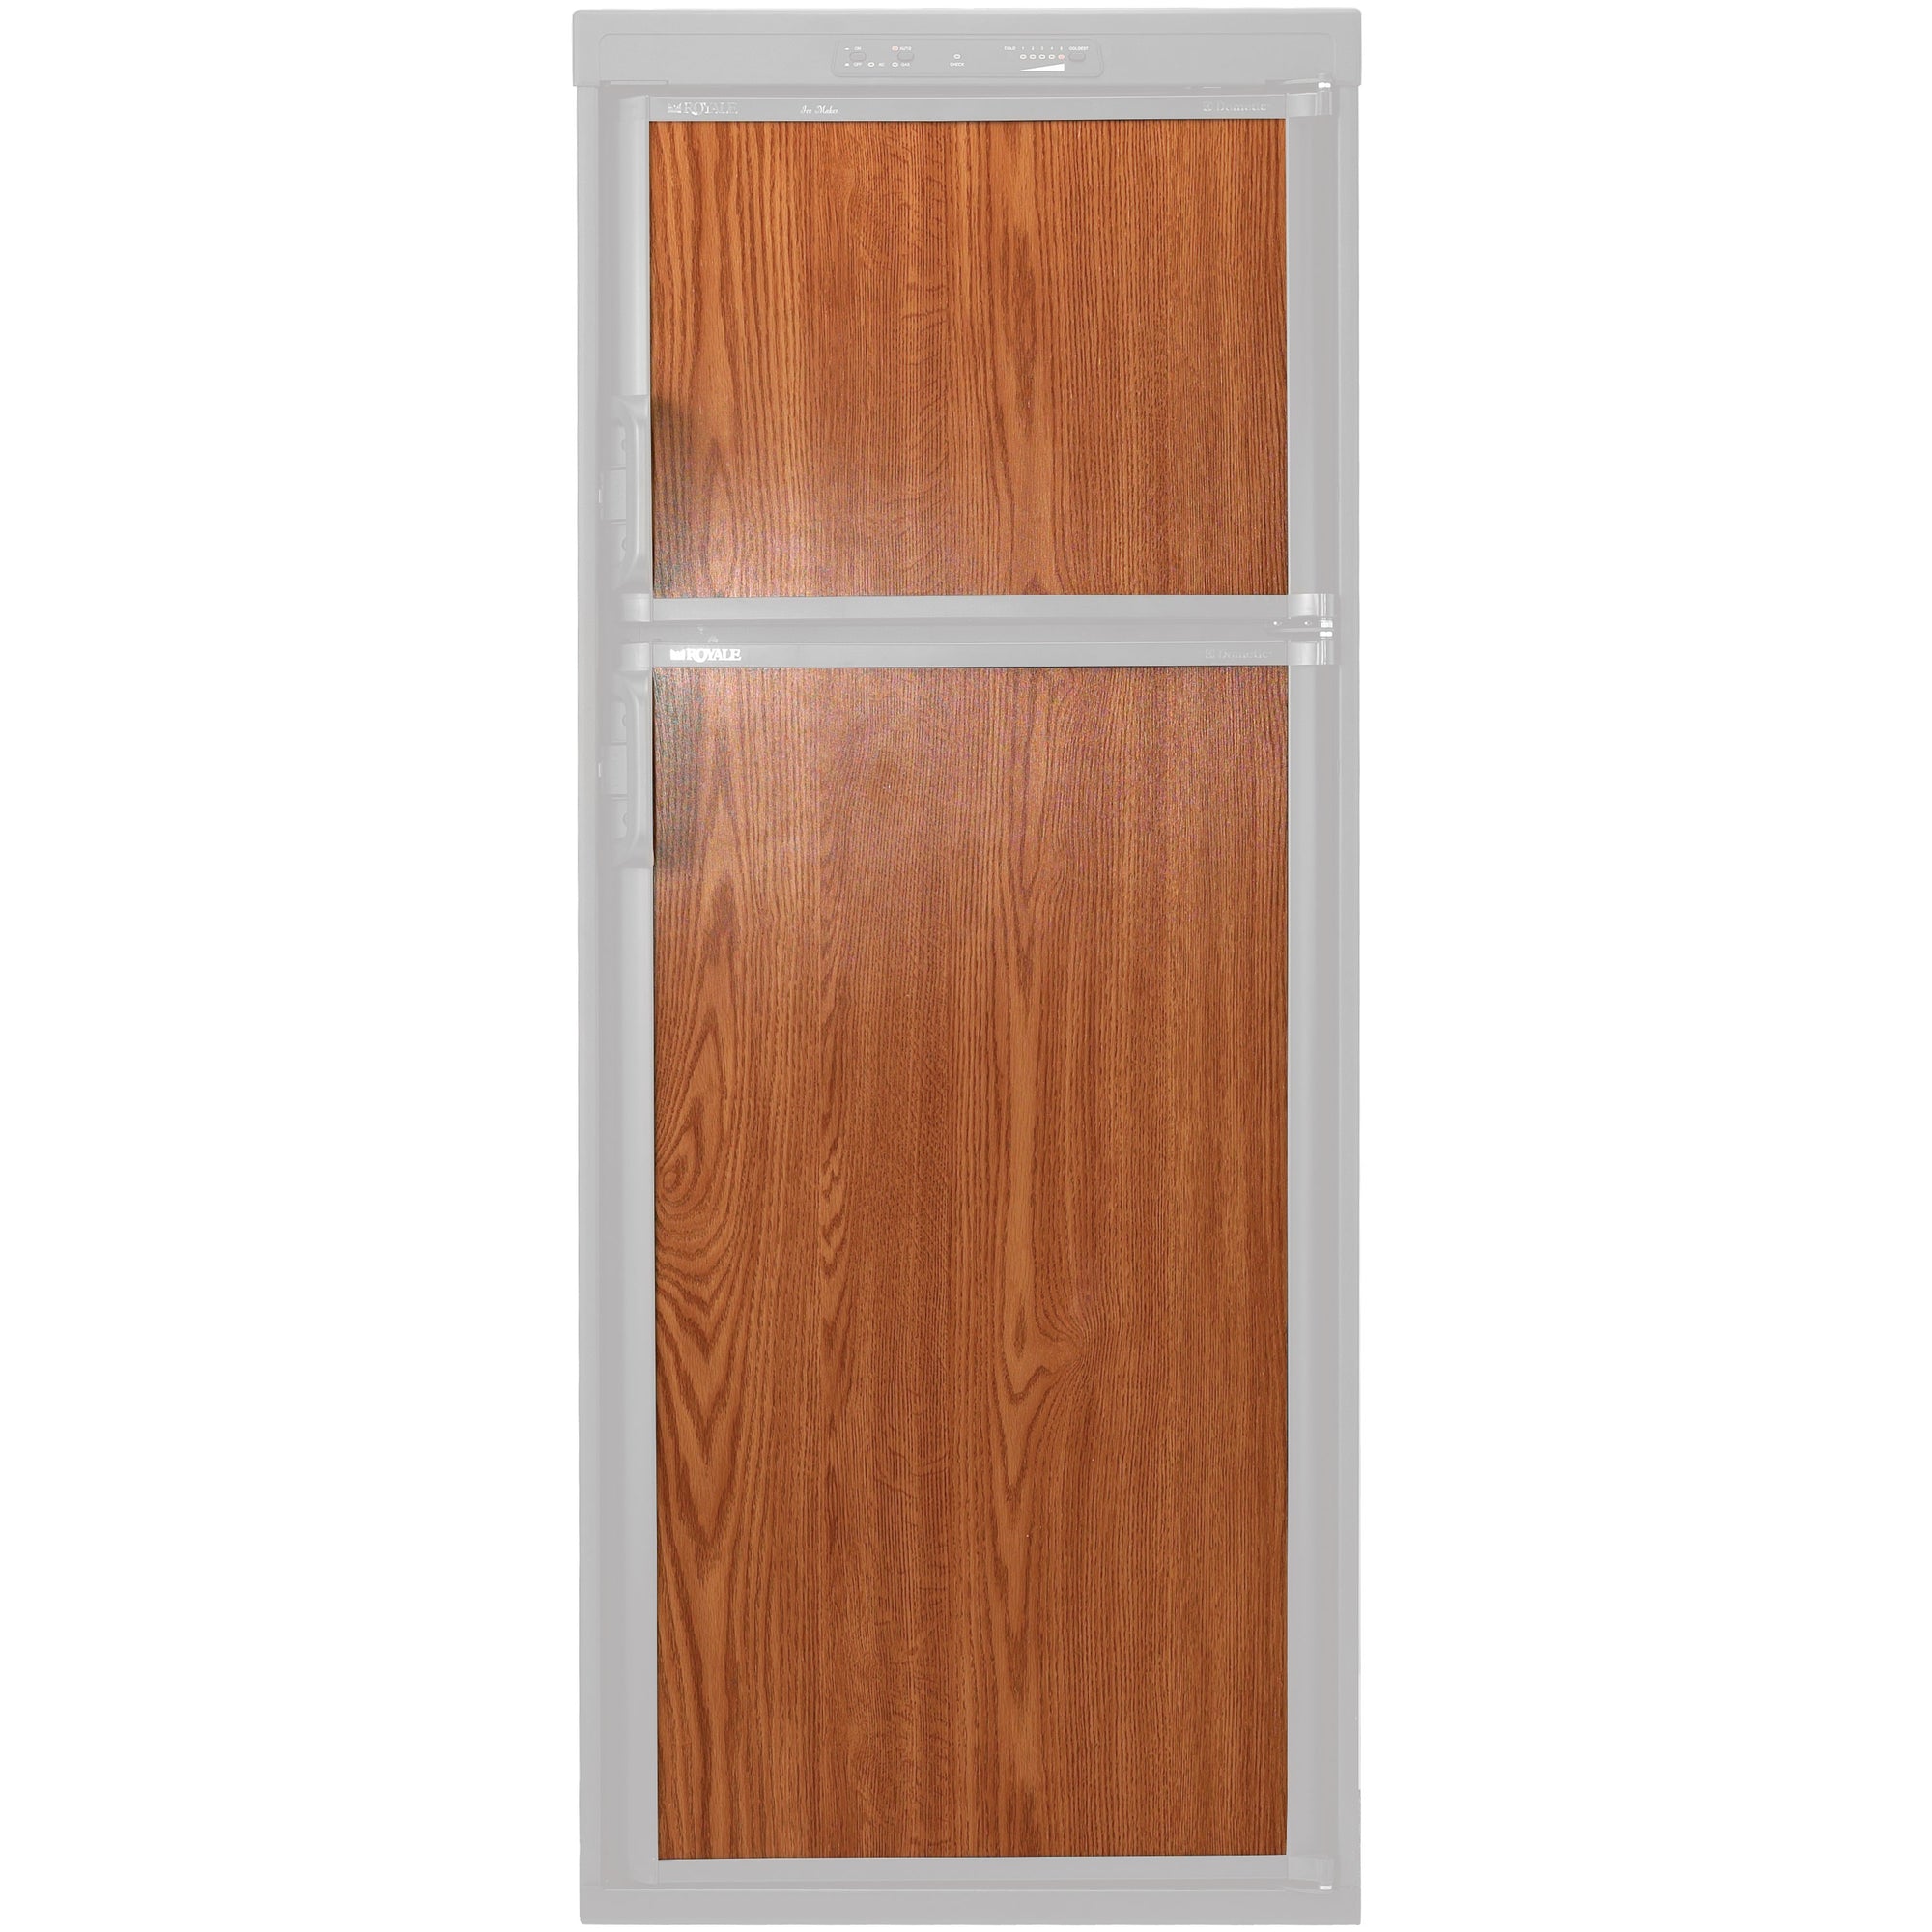 Dometic 3106863.065B Refrigerator Door Panel - Wood Grain, Main Panel 2551/2552/2553/2554